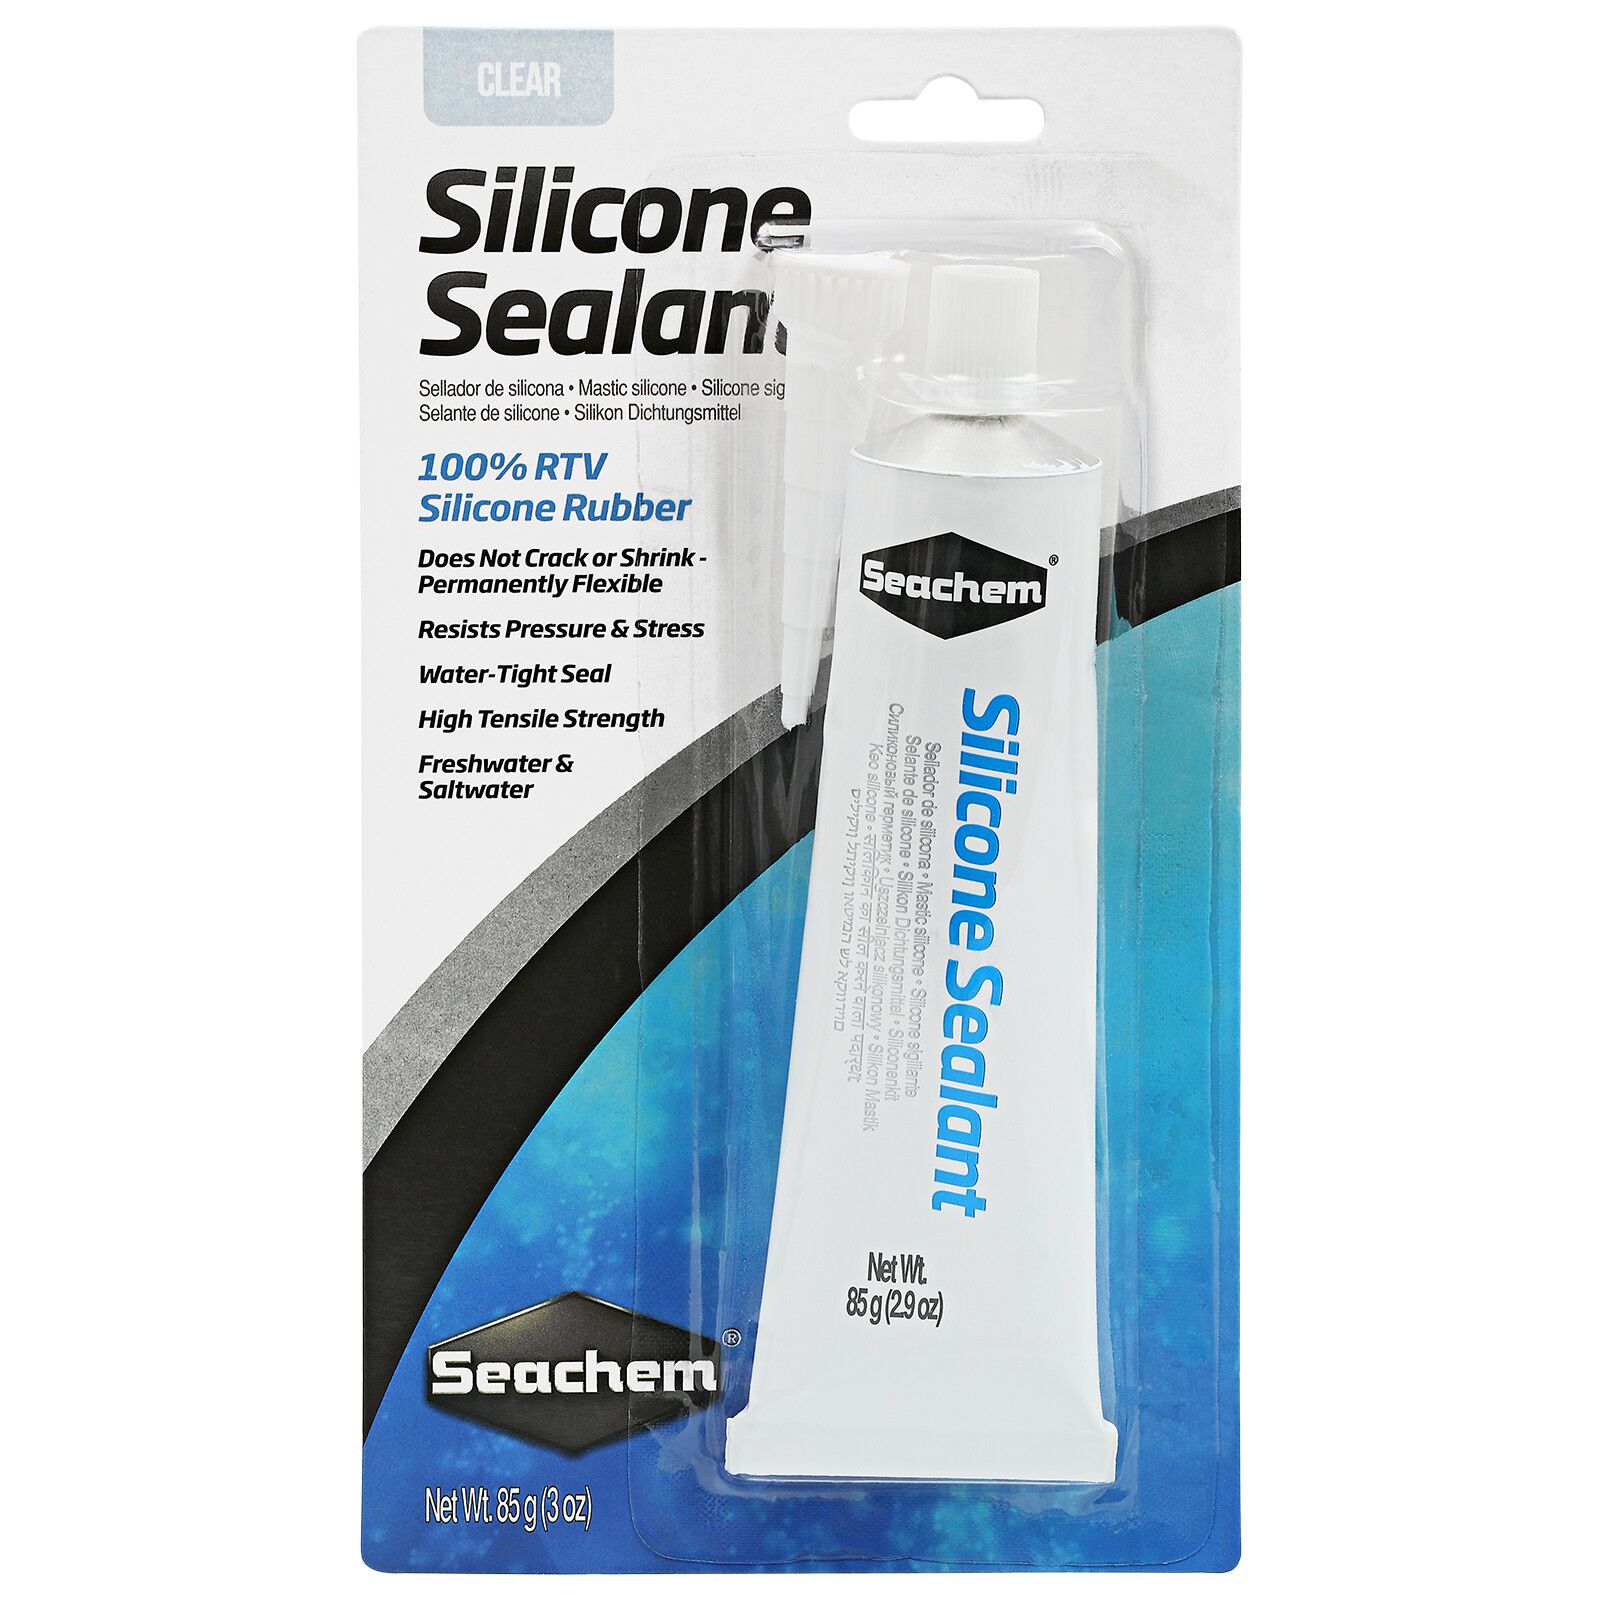 clear silicone sealant | Super Glue Blog